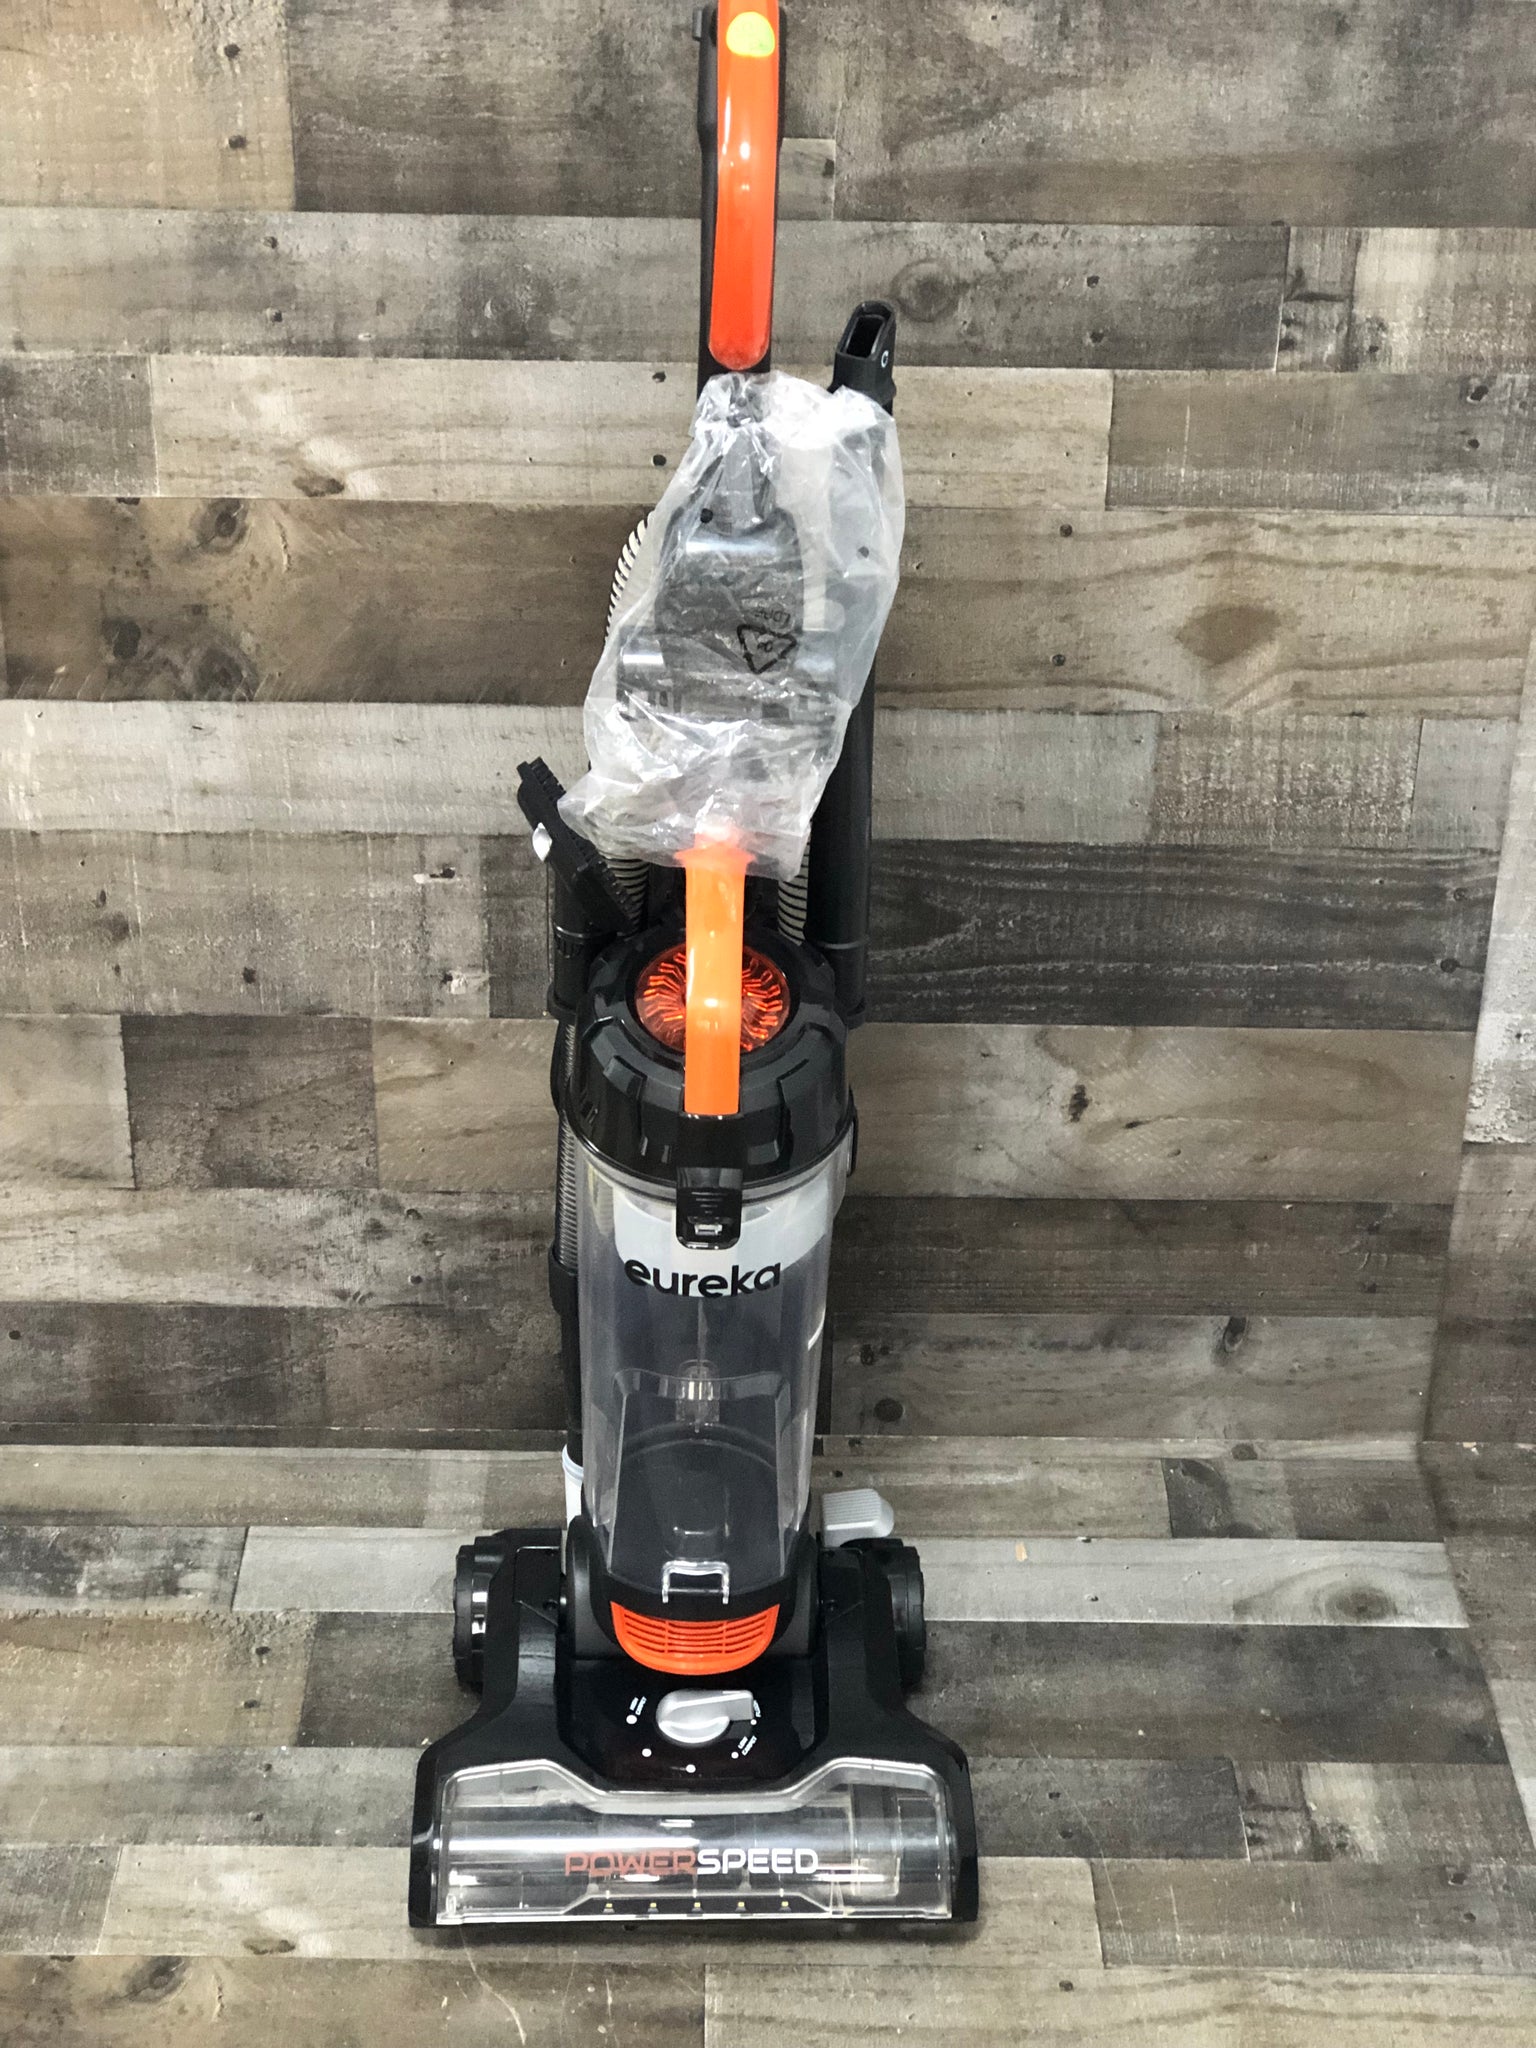 Eureka PowerSpeed Lightweight Powerful Upright Vacuum Cleaner for Carpet and Hard Floor, Turbo Spotlight with Pet Tool, Orange